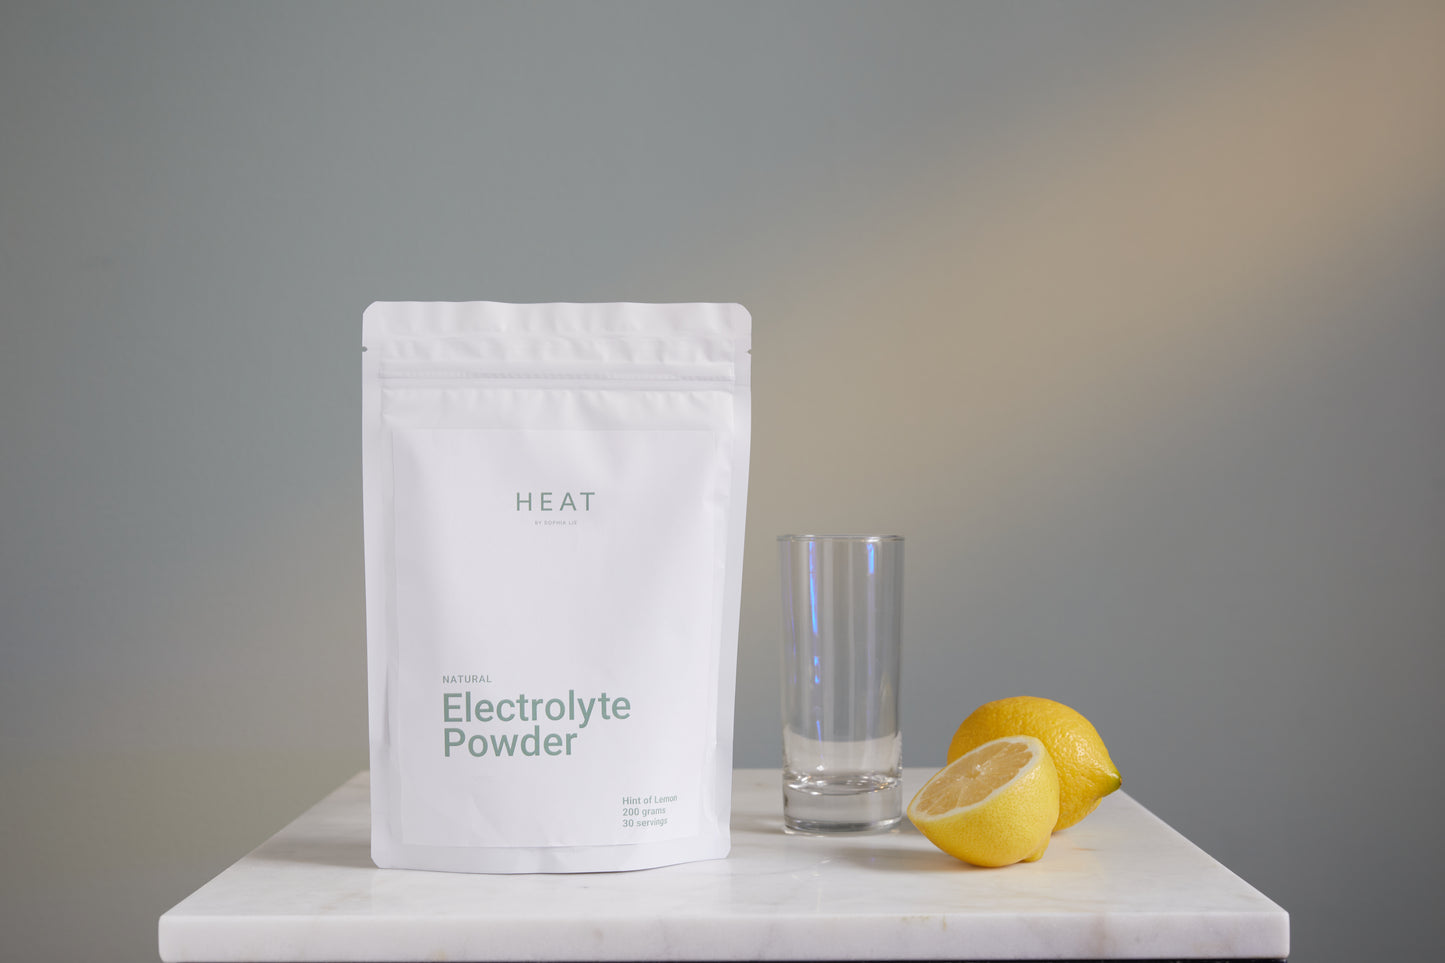 HEAT Natural Electrolyte Powder